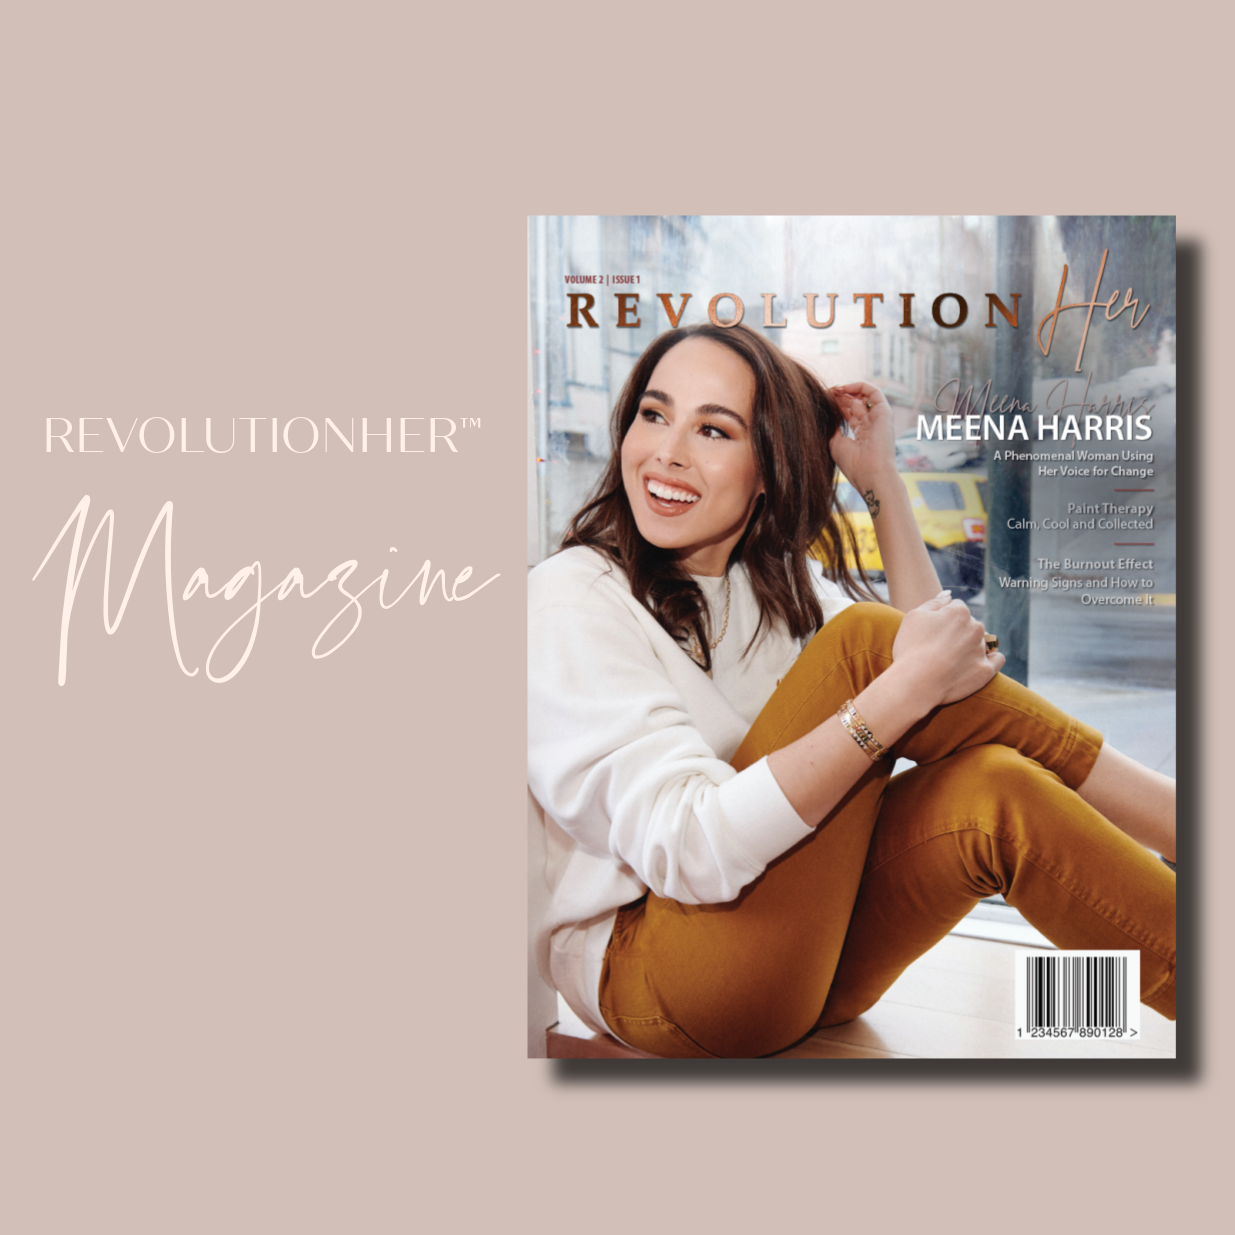 RevolutionHer™ Magazine V2.1 featuring Meena Harris